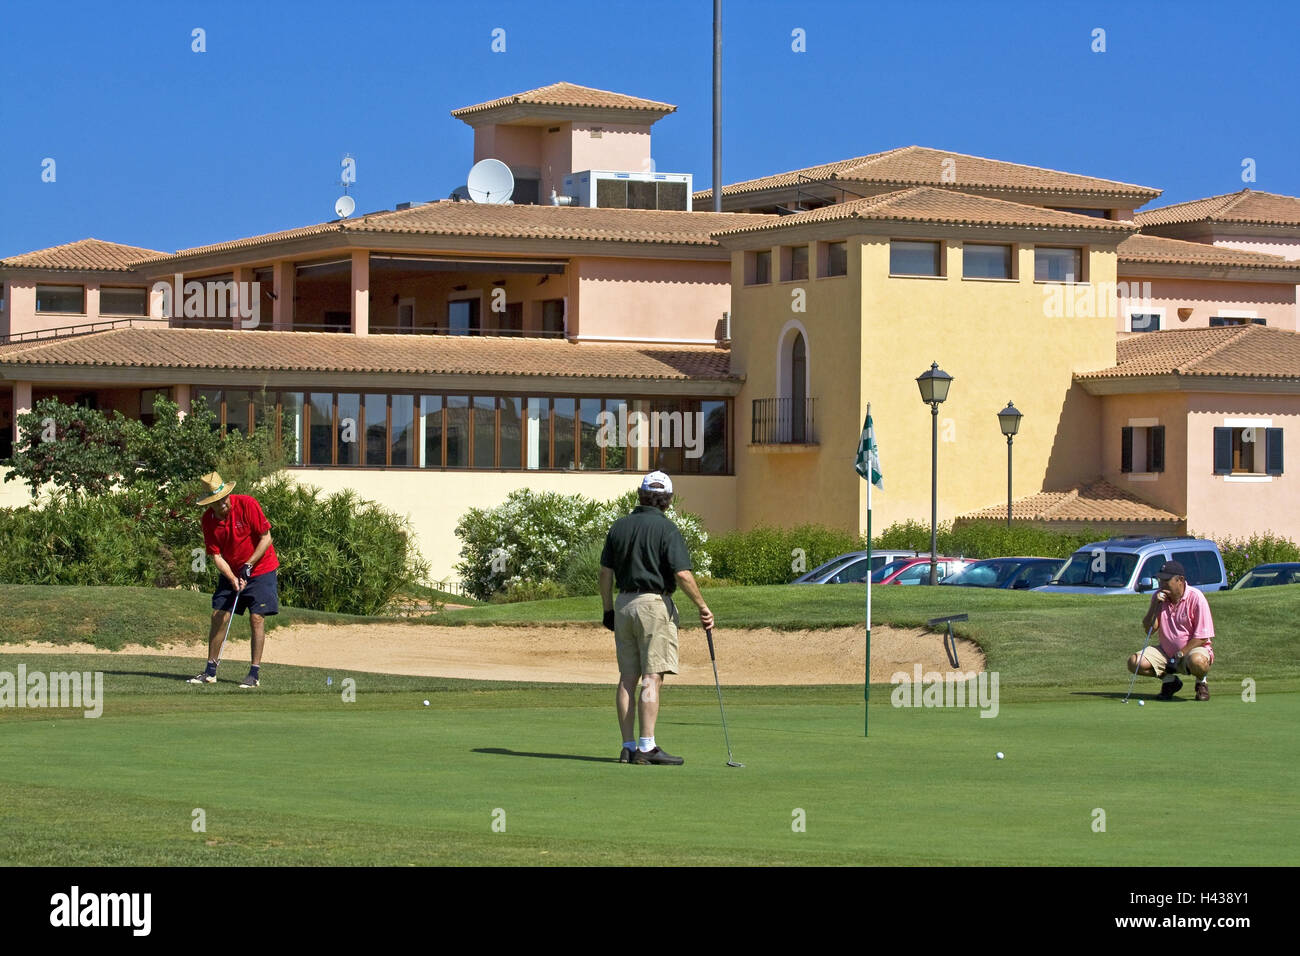 Spain, the Balearic Islands, island Majorca, golf course, club house, Green, golfer, no model release, Stock Photo